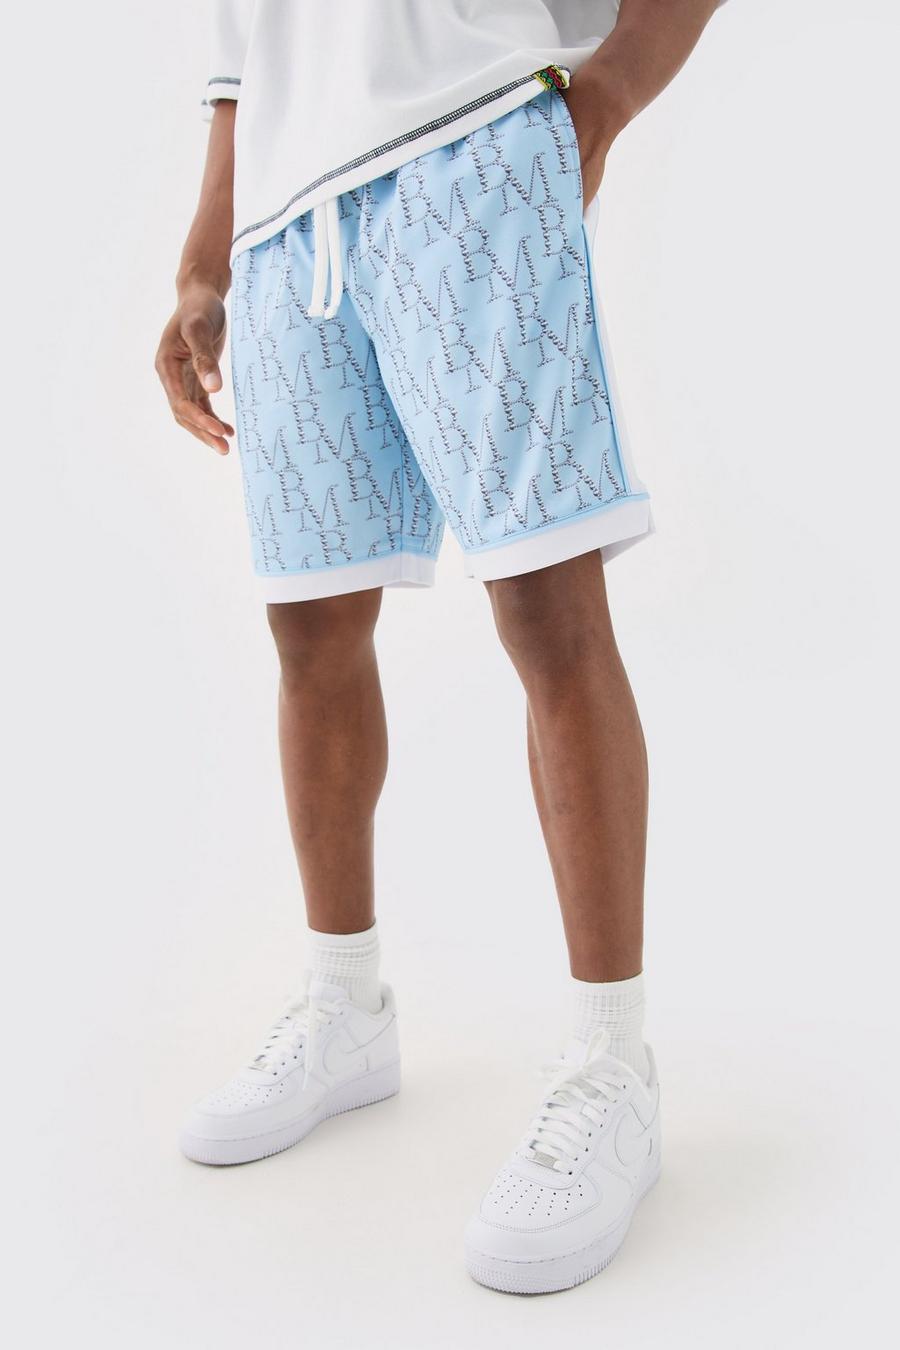 Pantalón corto holgado de baloncesto de malla con estampado BM, Light blue